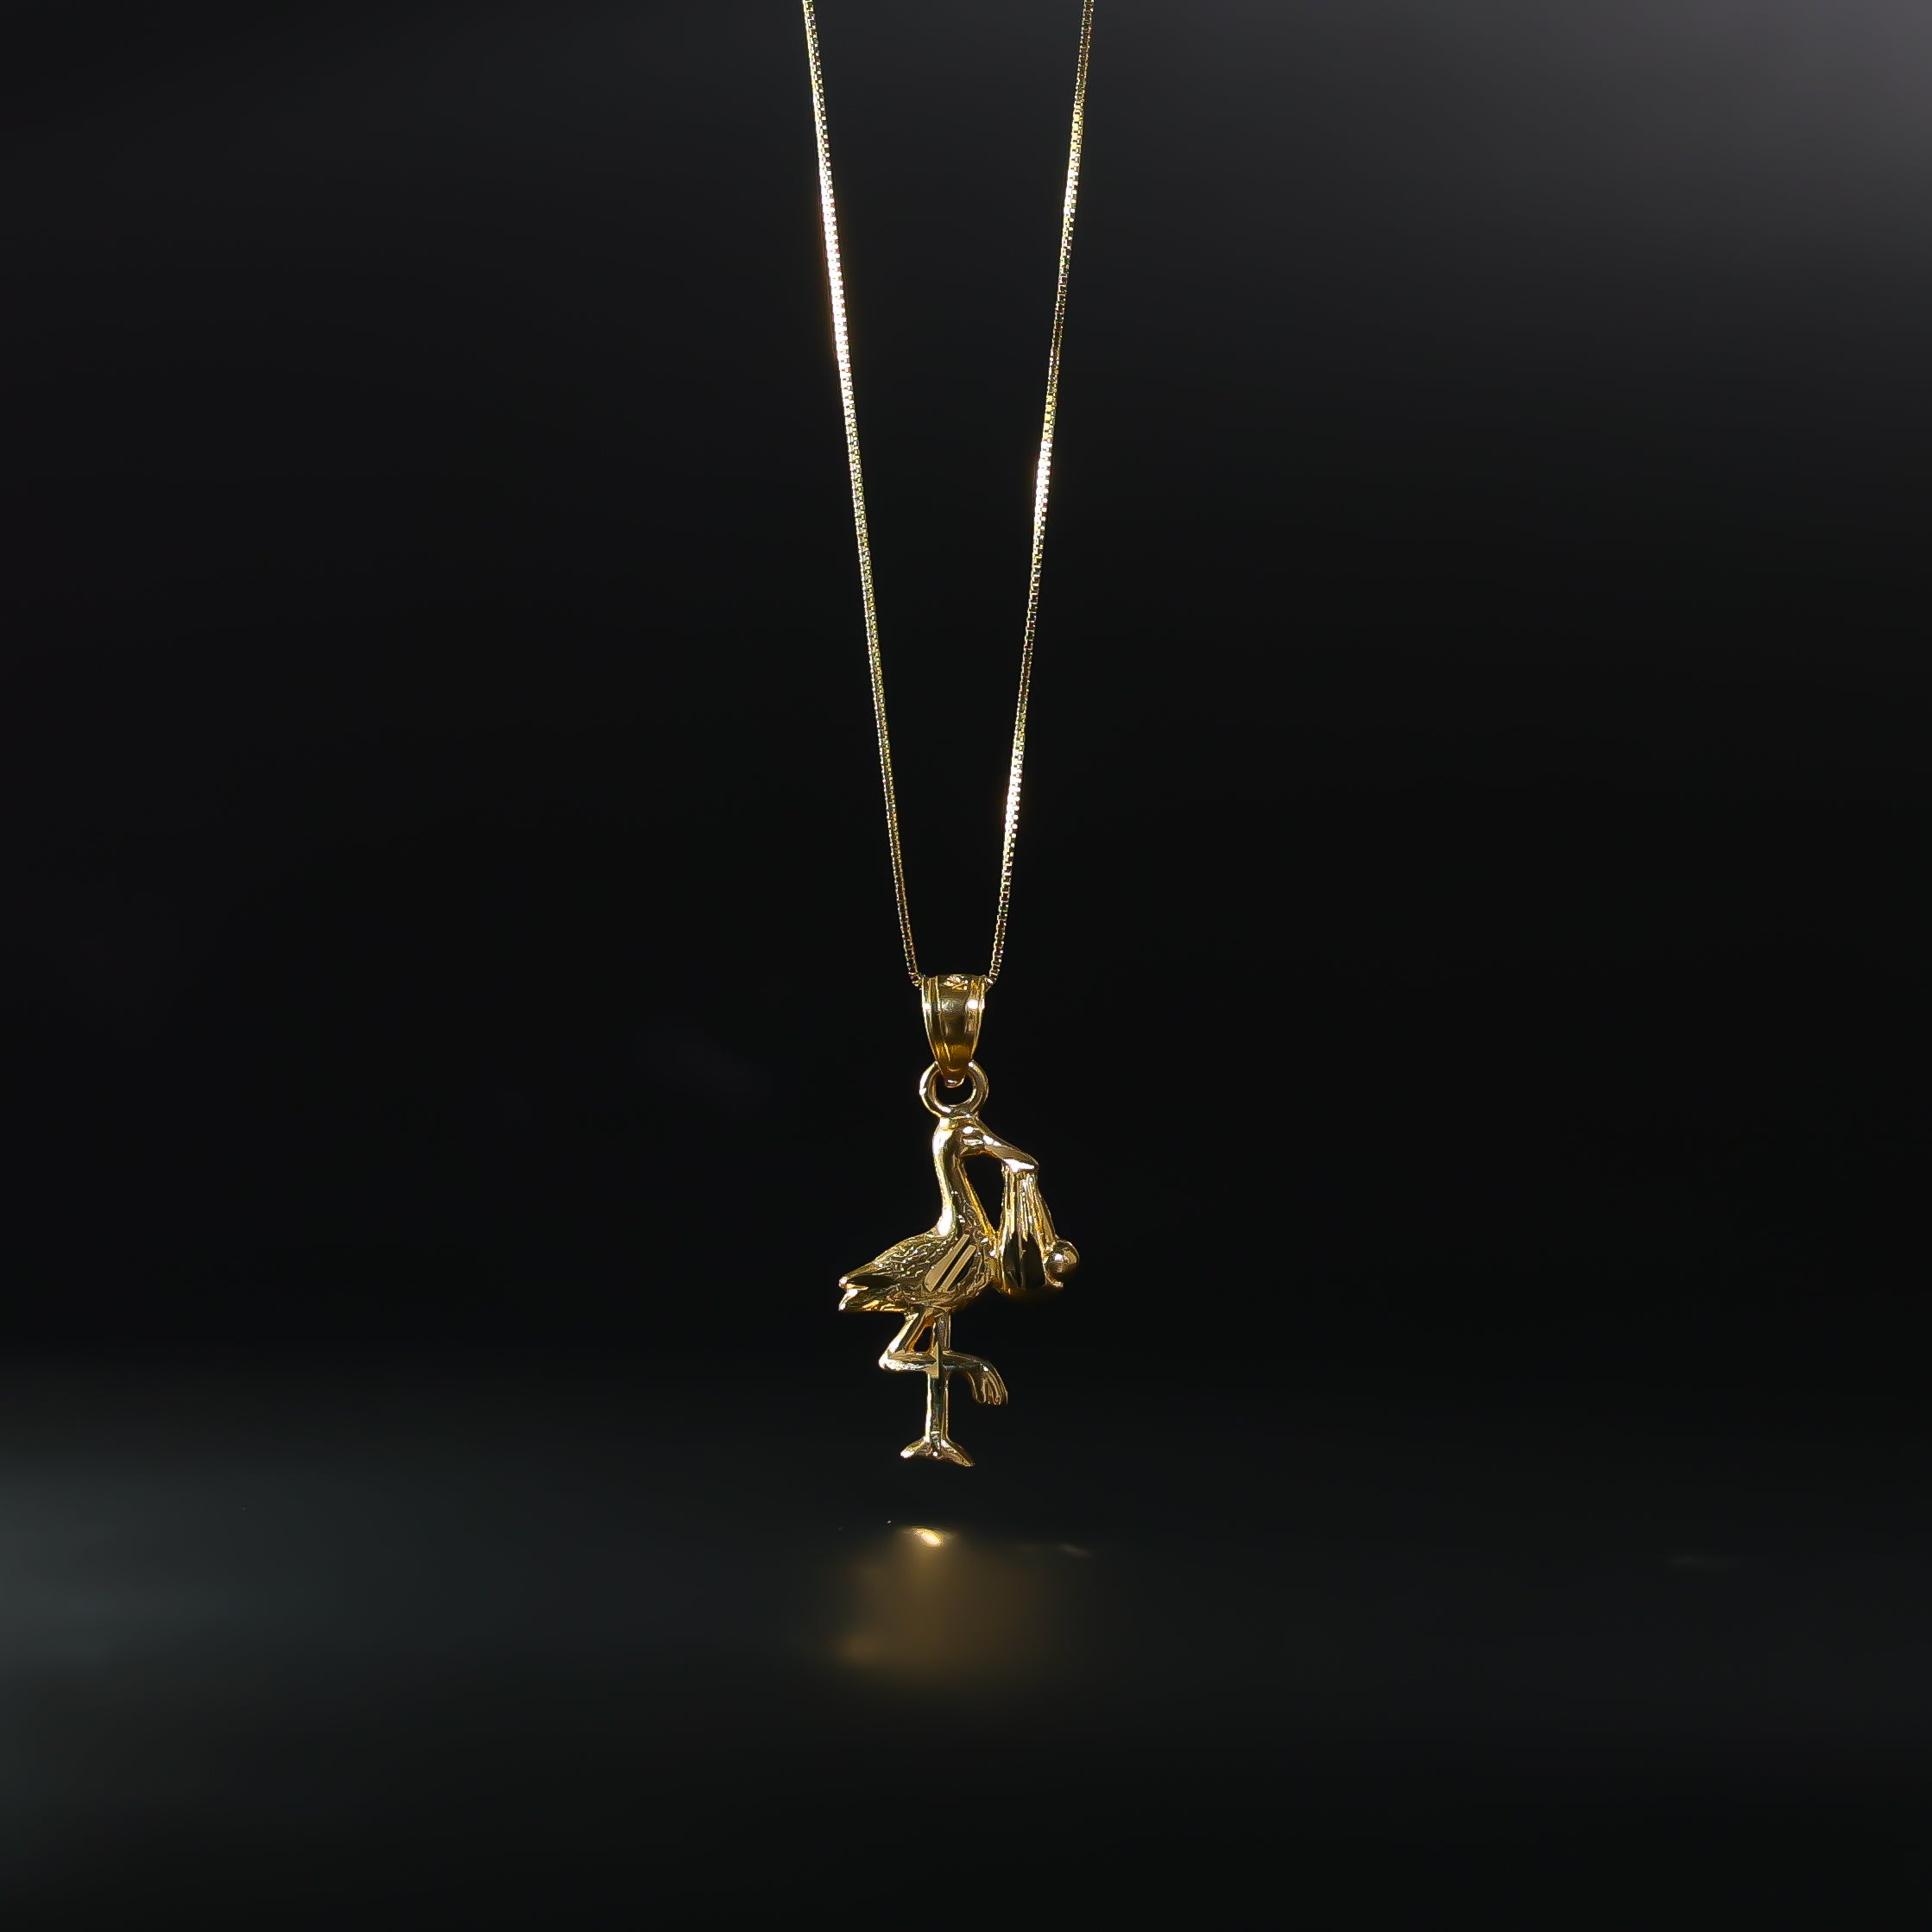 Gold Crane Pendant Model-1694 - Charlie & Co. Jewelry